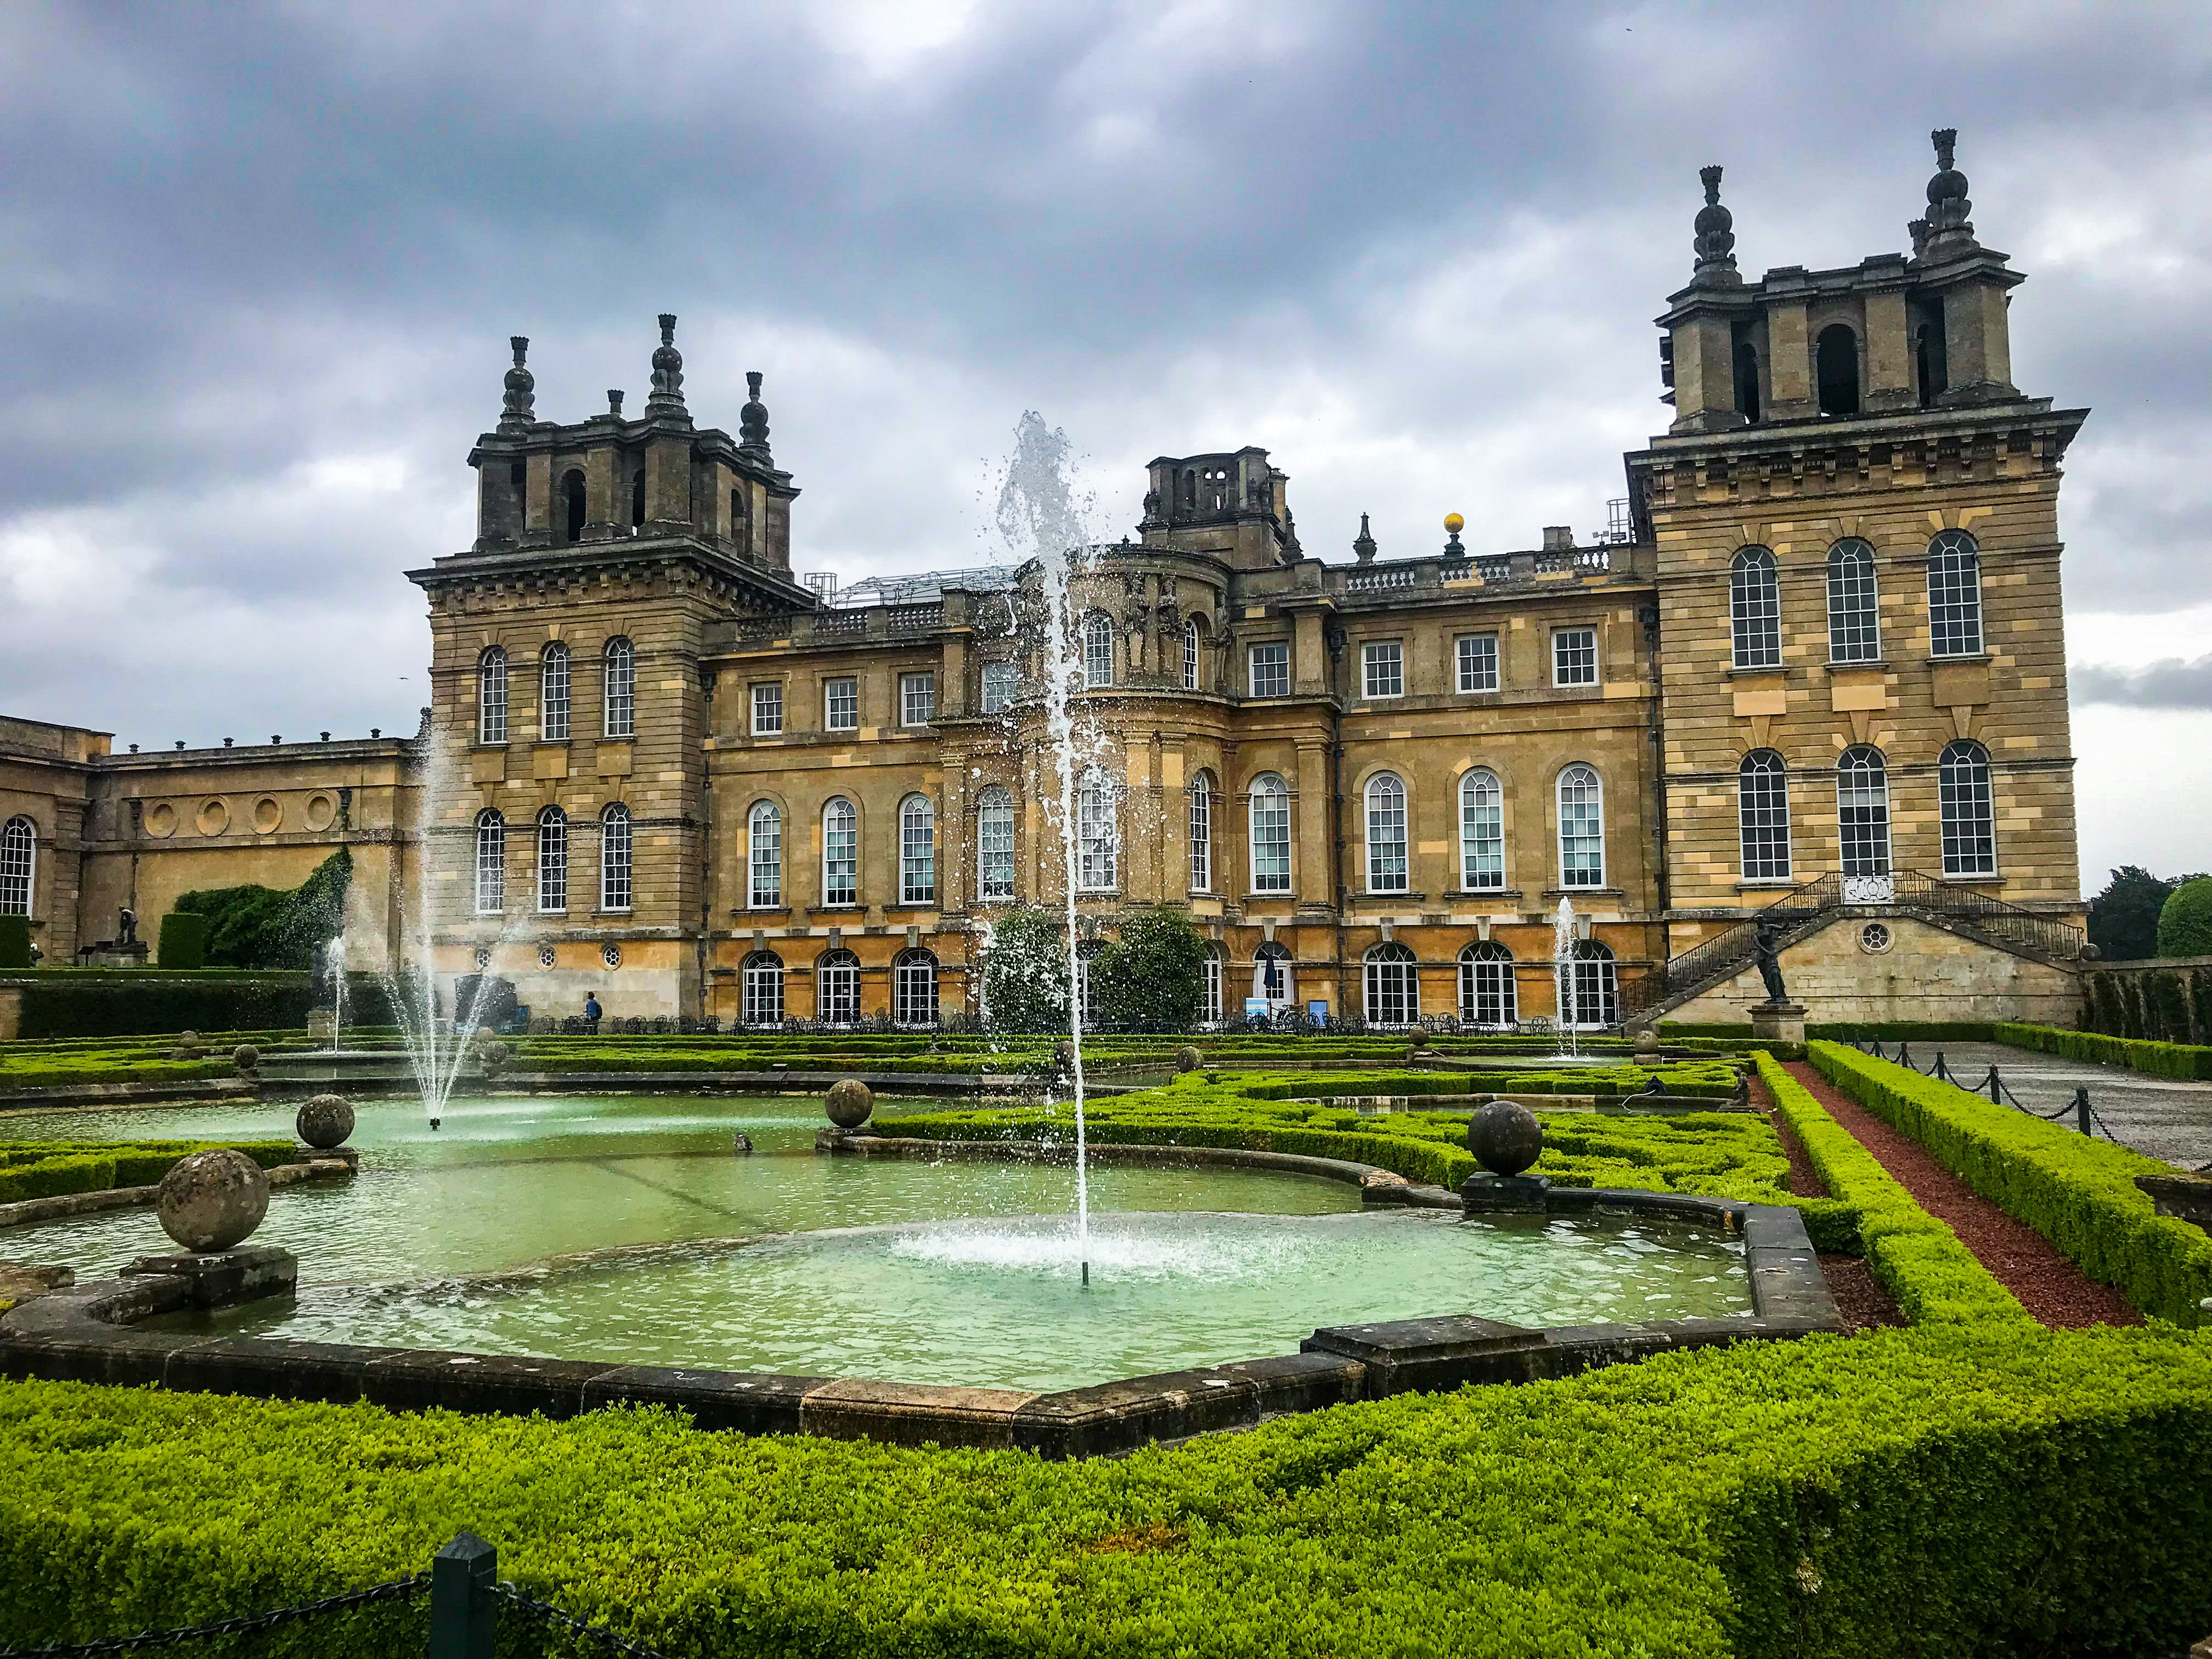 Blenheim Palace and Gardens